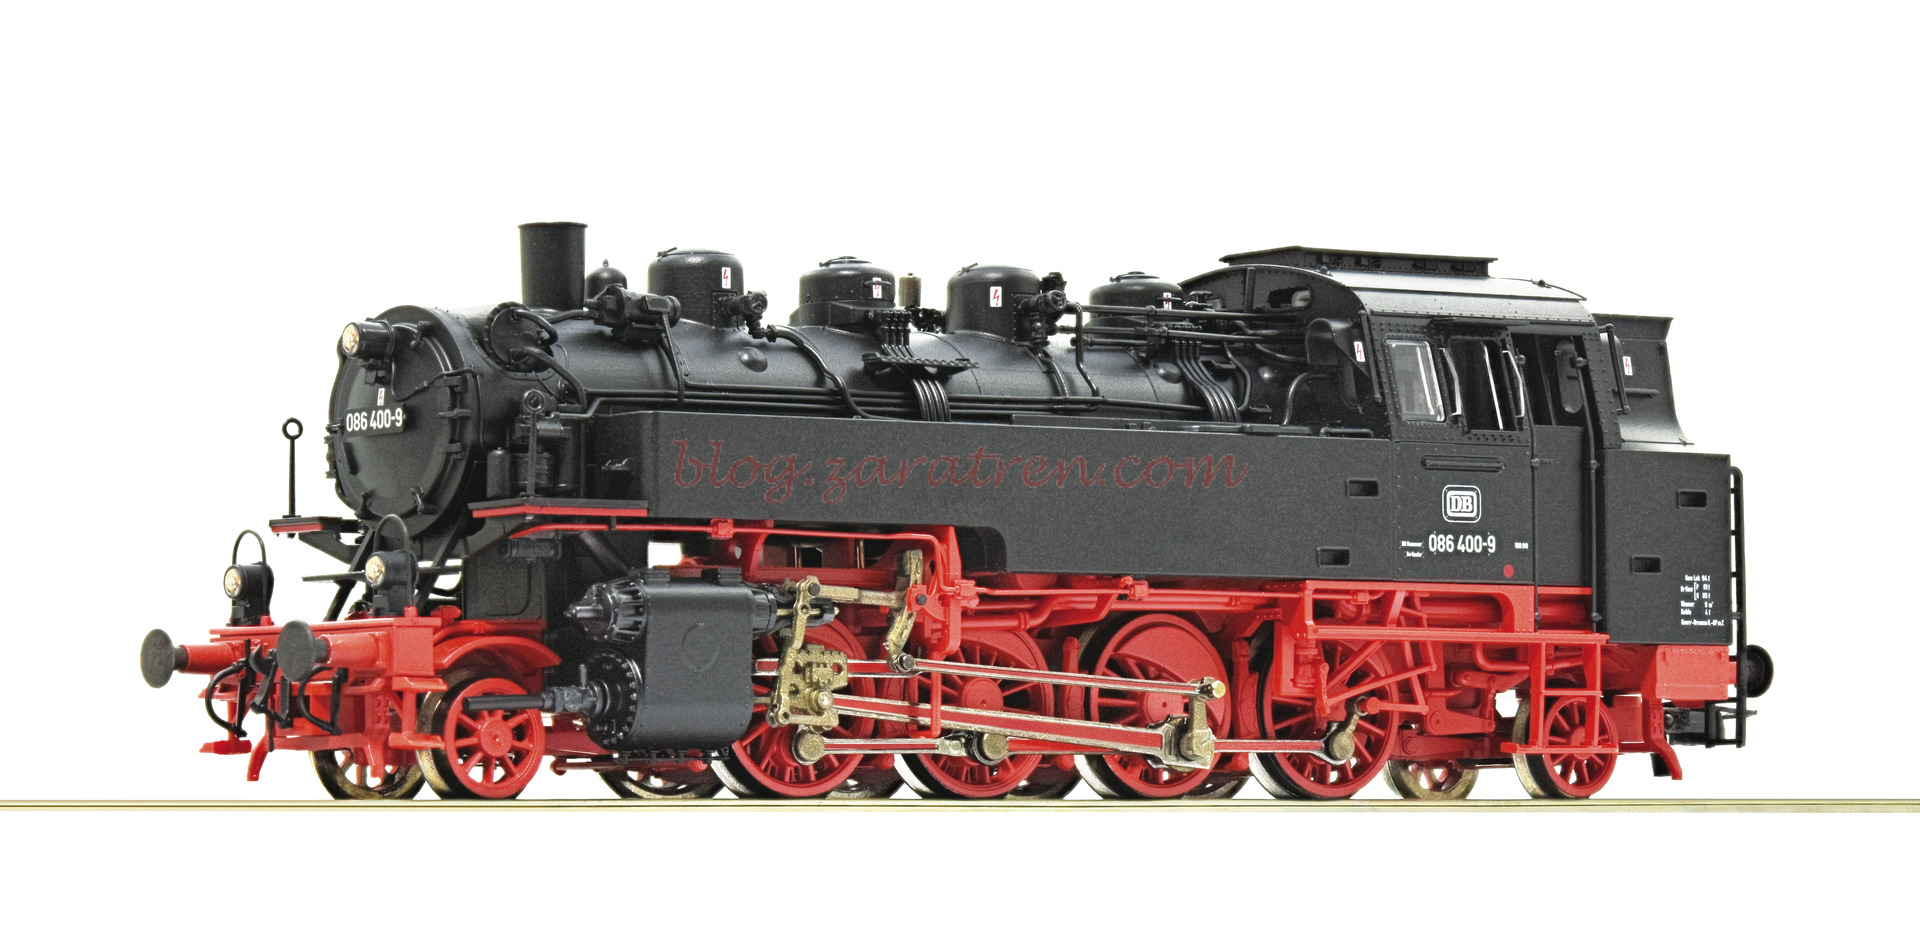 Roco – Locomotora de Vapor 086 400-9, DB, Epoca IV, Analogica, Escala H0, Ref: 70317.